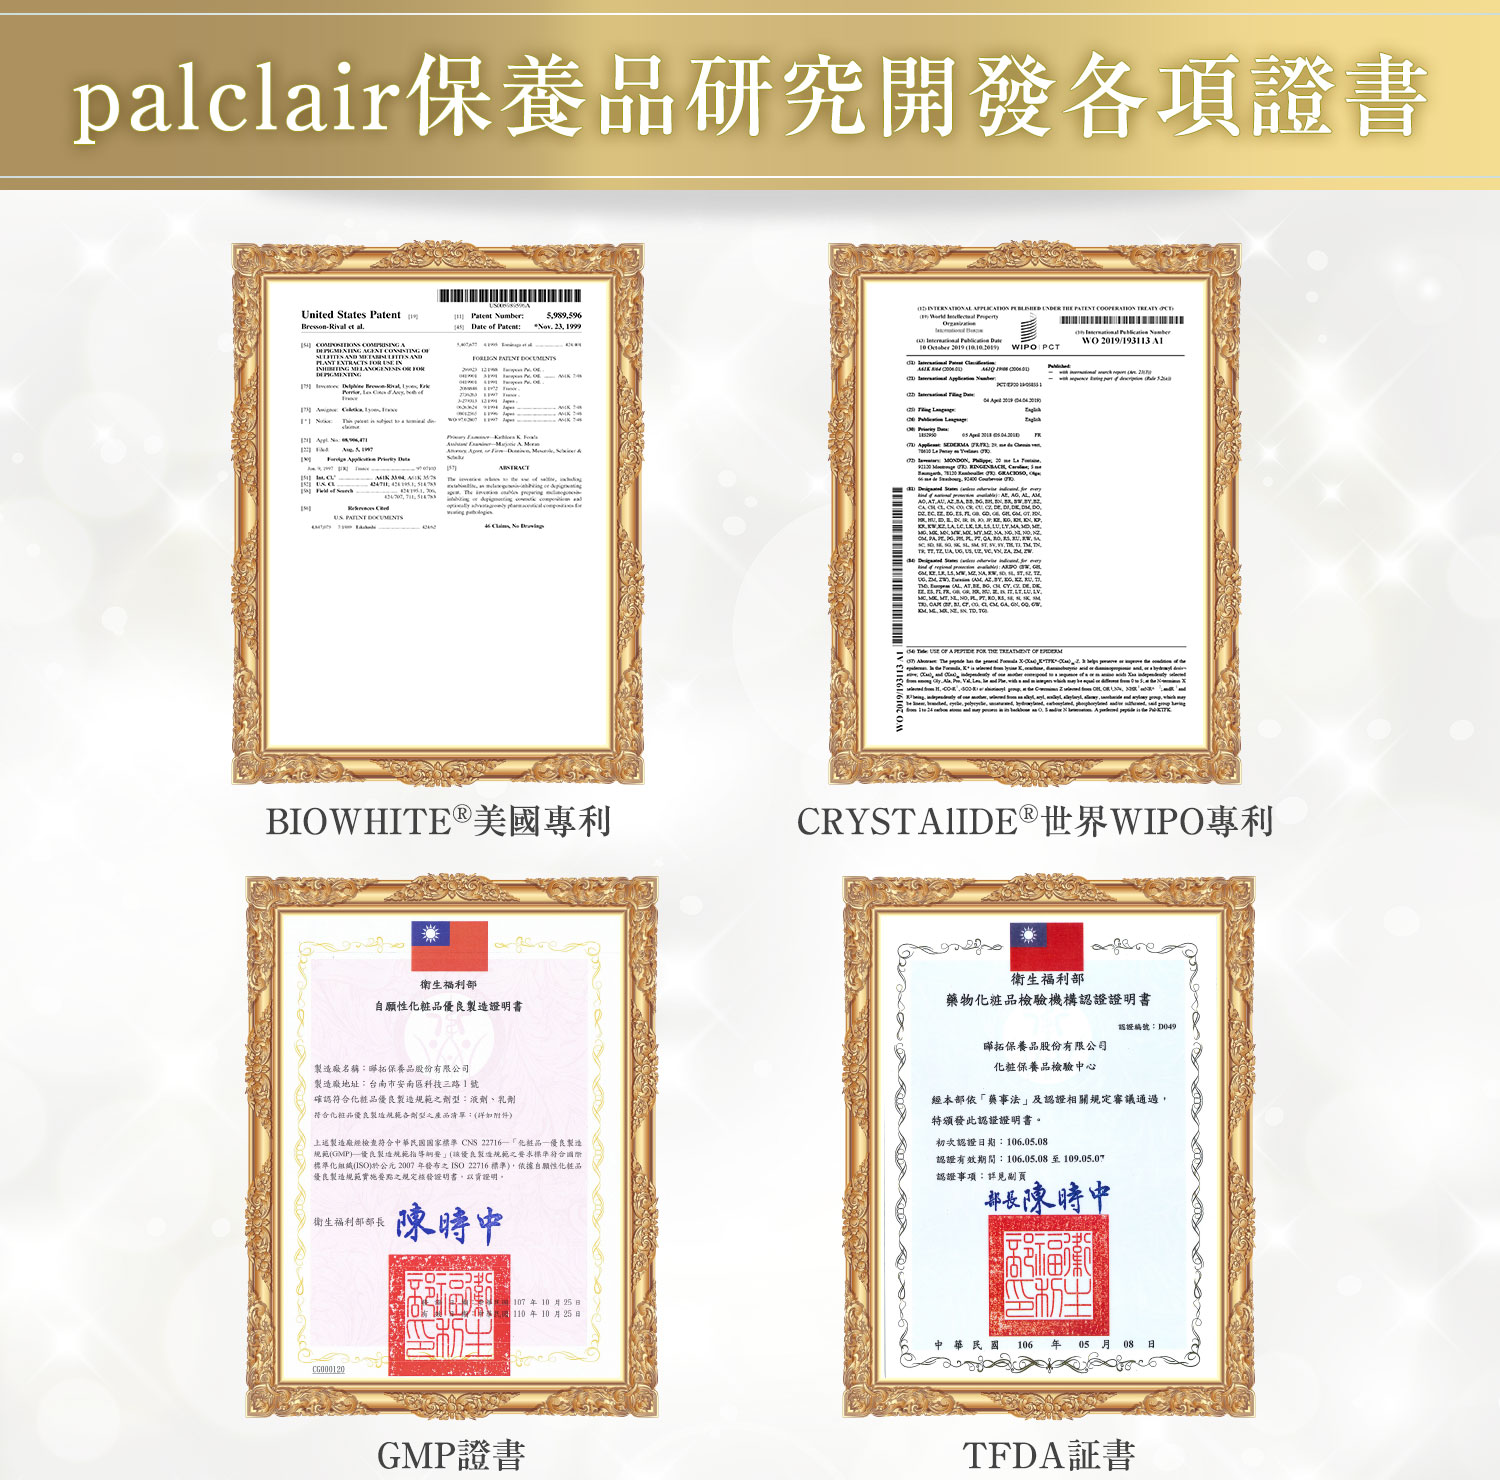 palclair專利證書